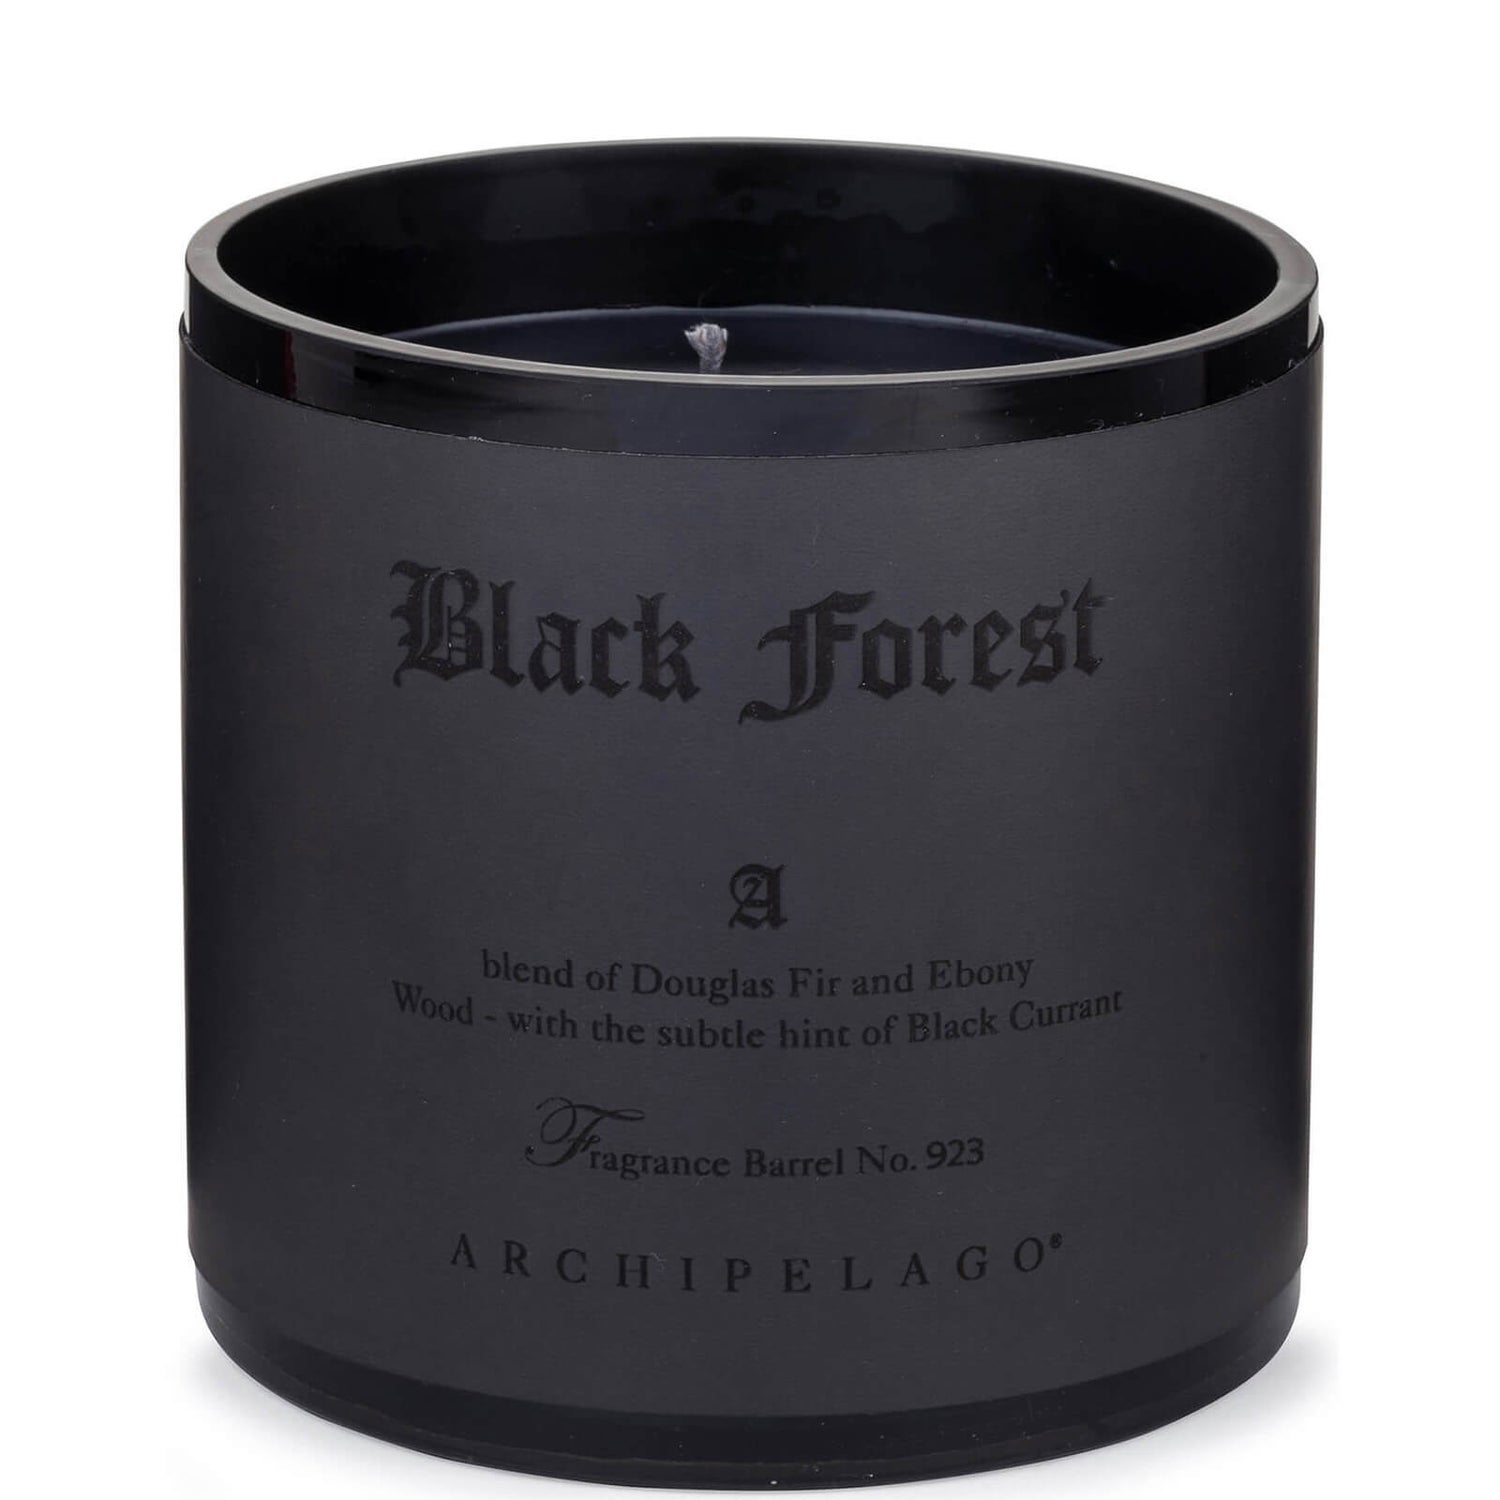 Ароматическая свеча Archipelago Botanicals XL 3 Wick Black Forest Candle, 1630 г